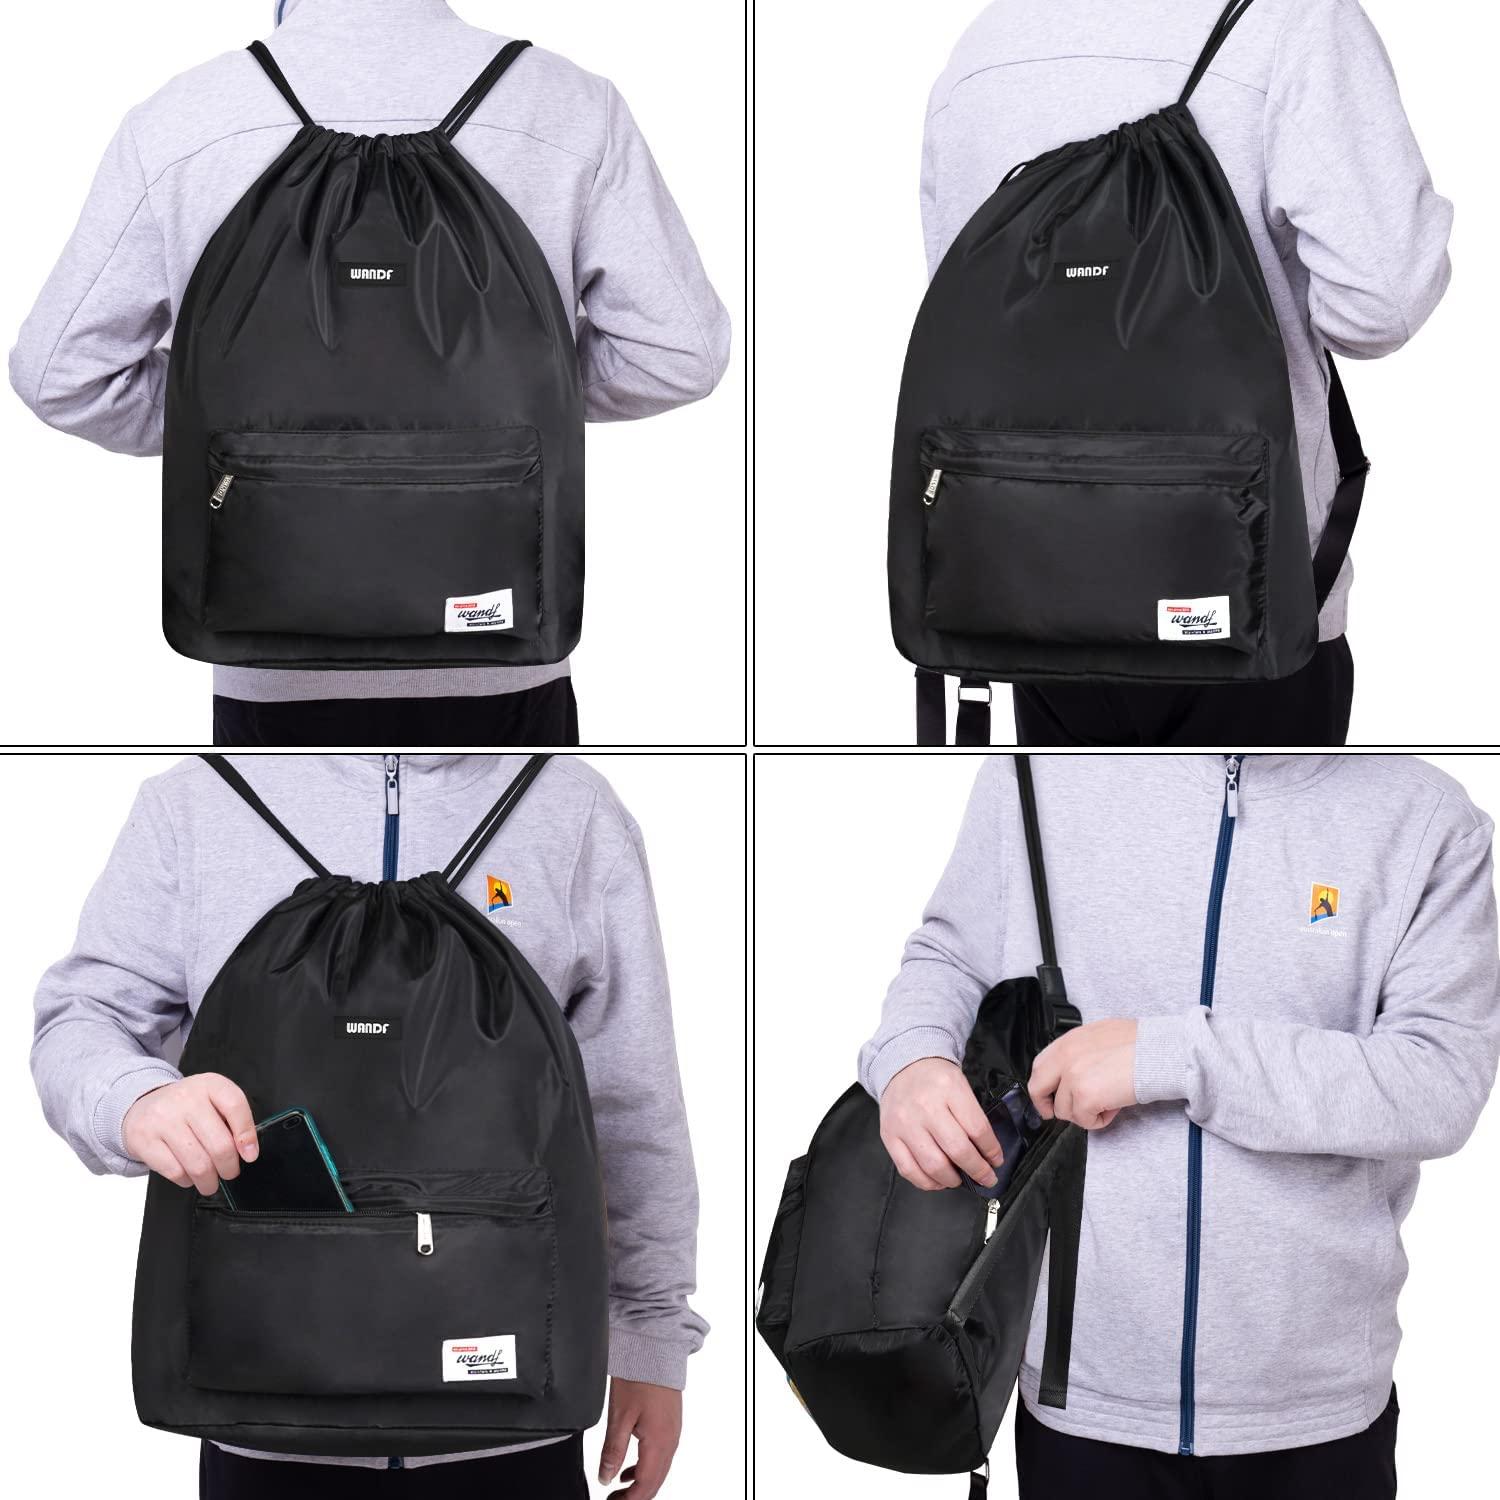 Travel Nylon Drawstring Backpack Bag String Waterproof Sackpack Sports Bags